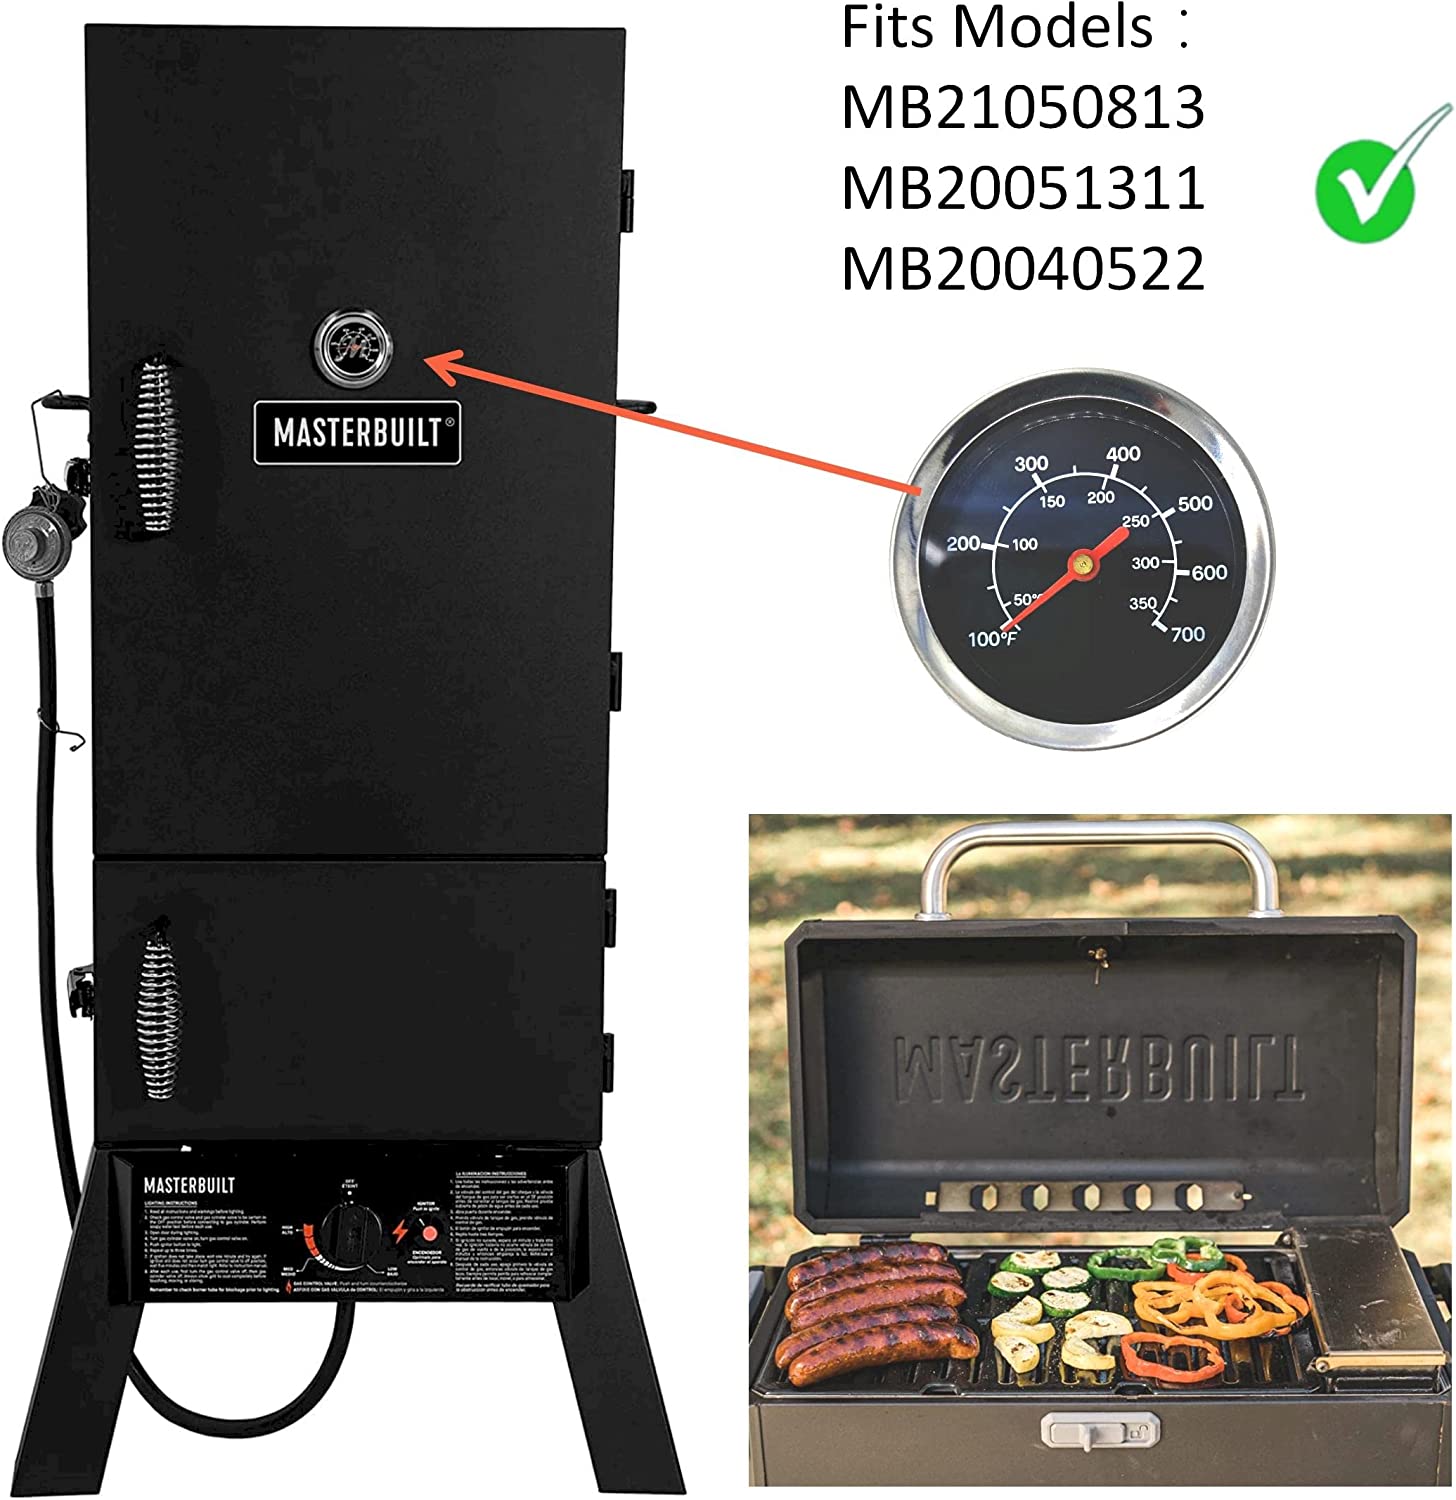 Temperature guage Replacement Parts for Masterbuilt MB20051311/MB21050813 Propane Smoker